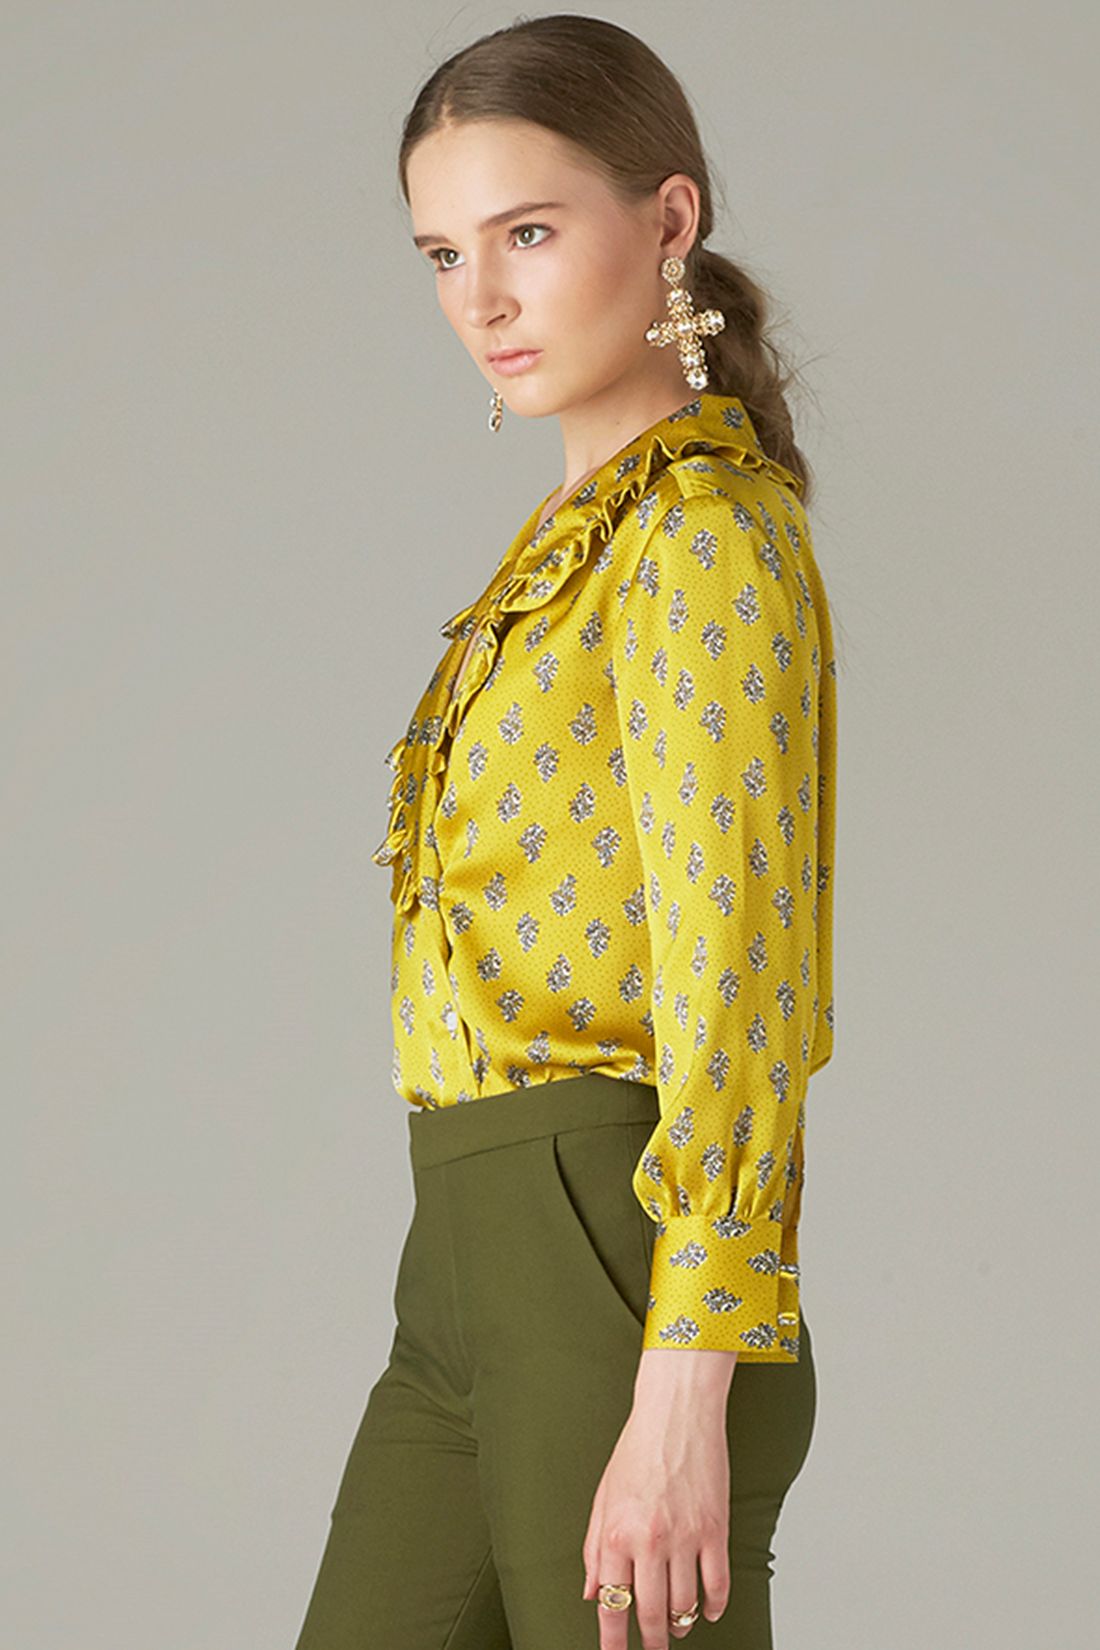 Ruffle collor long sleeve printed blouse